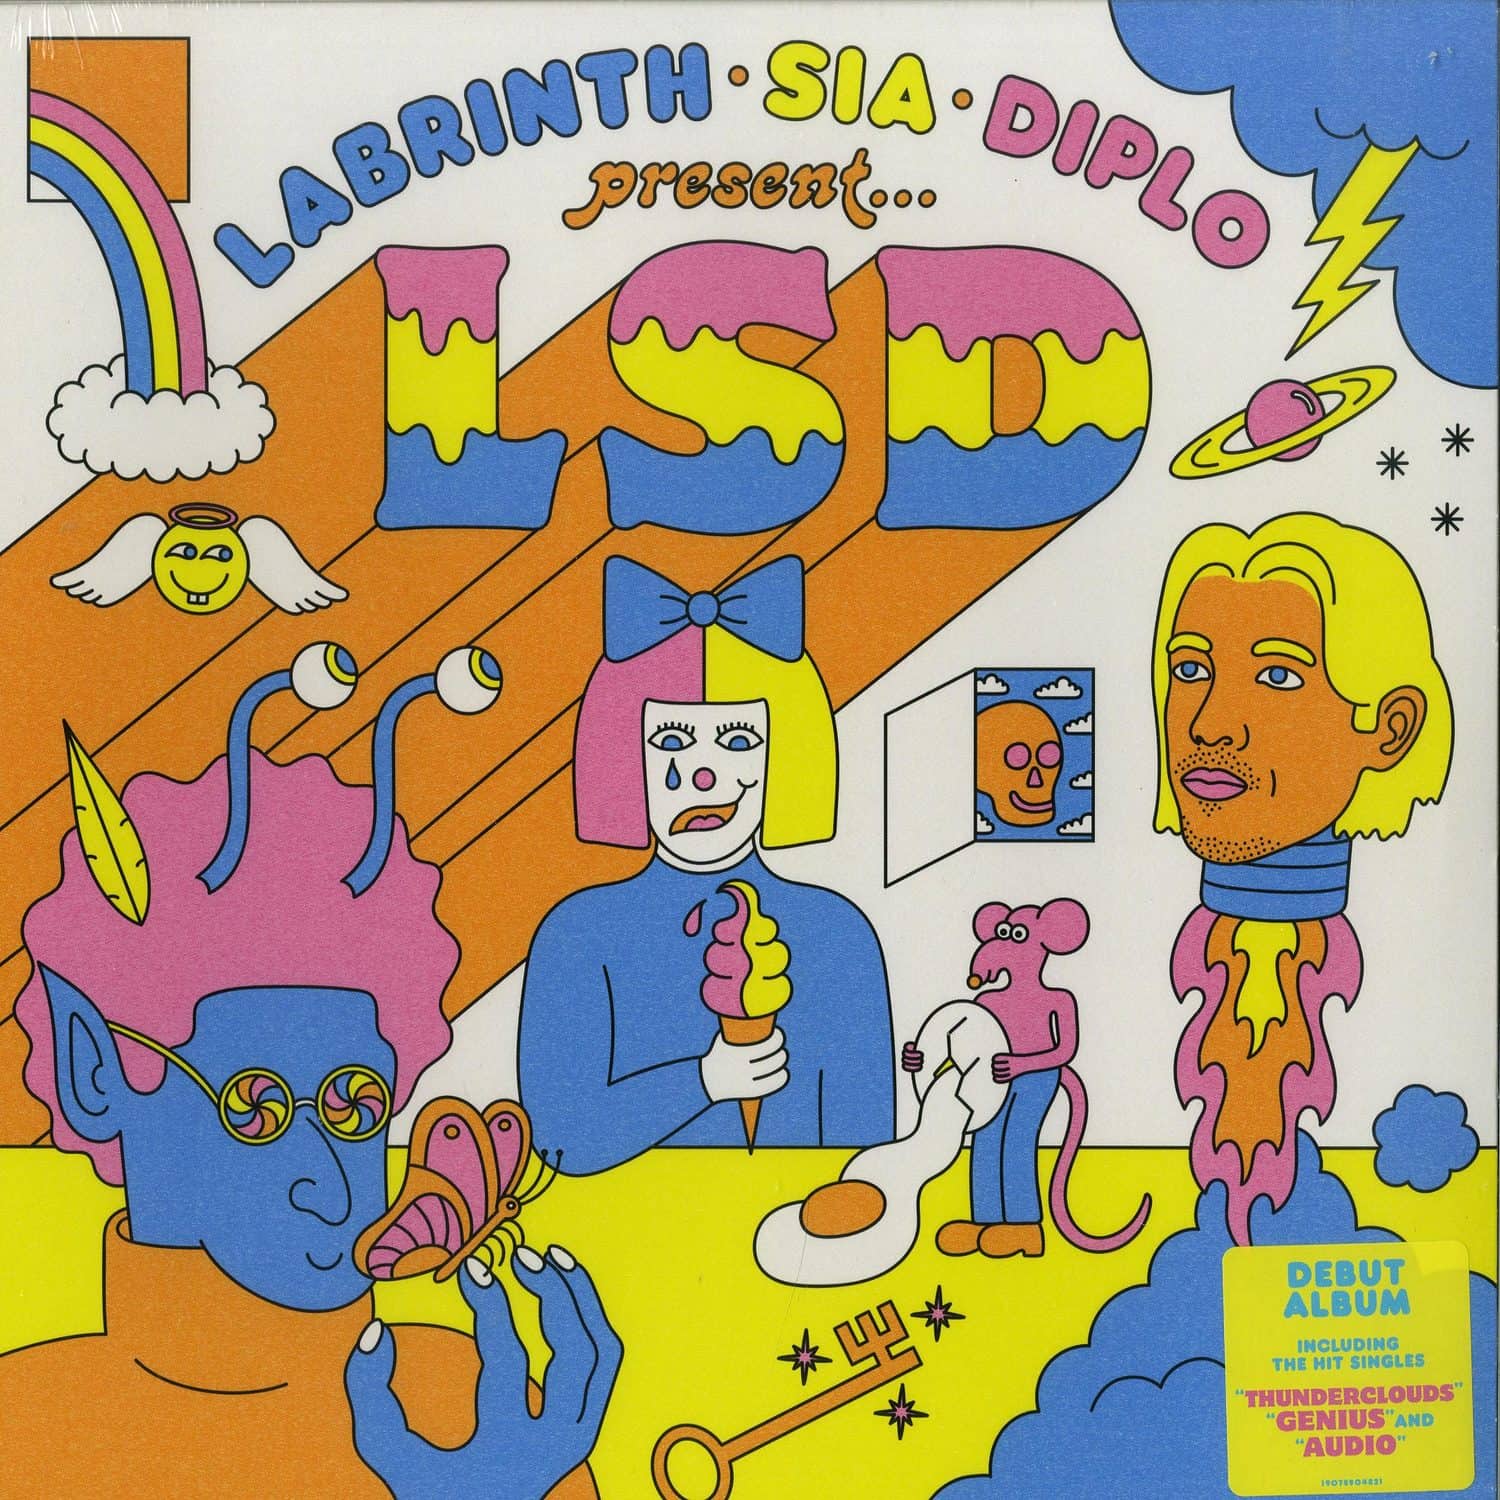 Labrinth, Sia & Diplo present LSD - LSD 